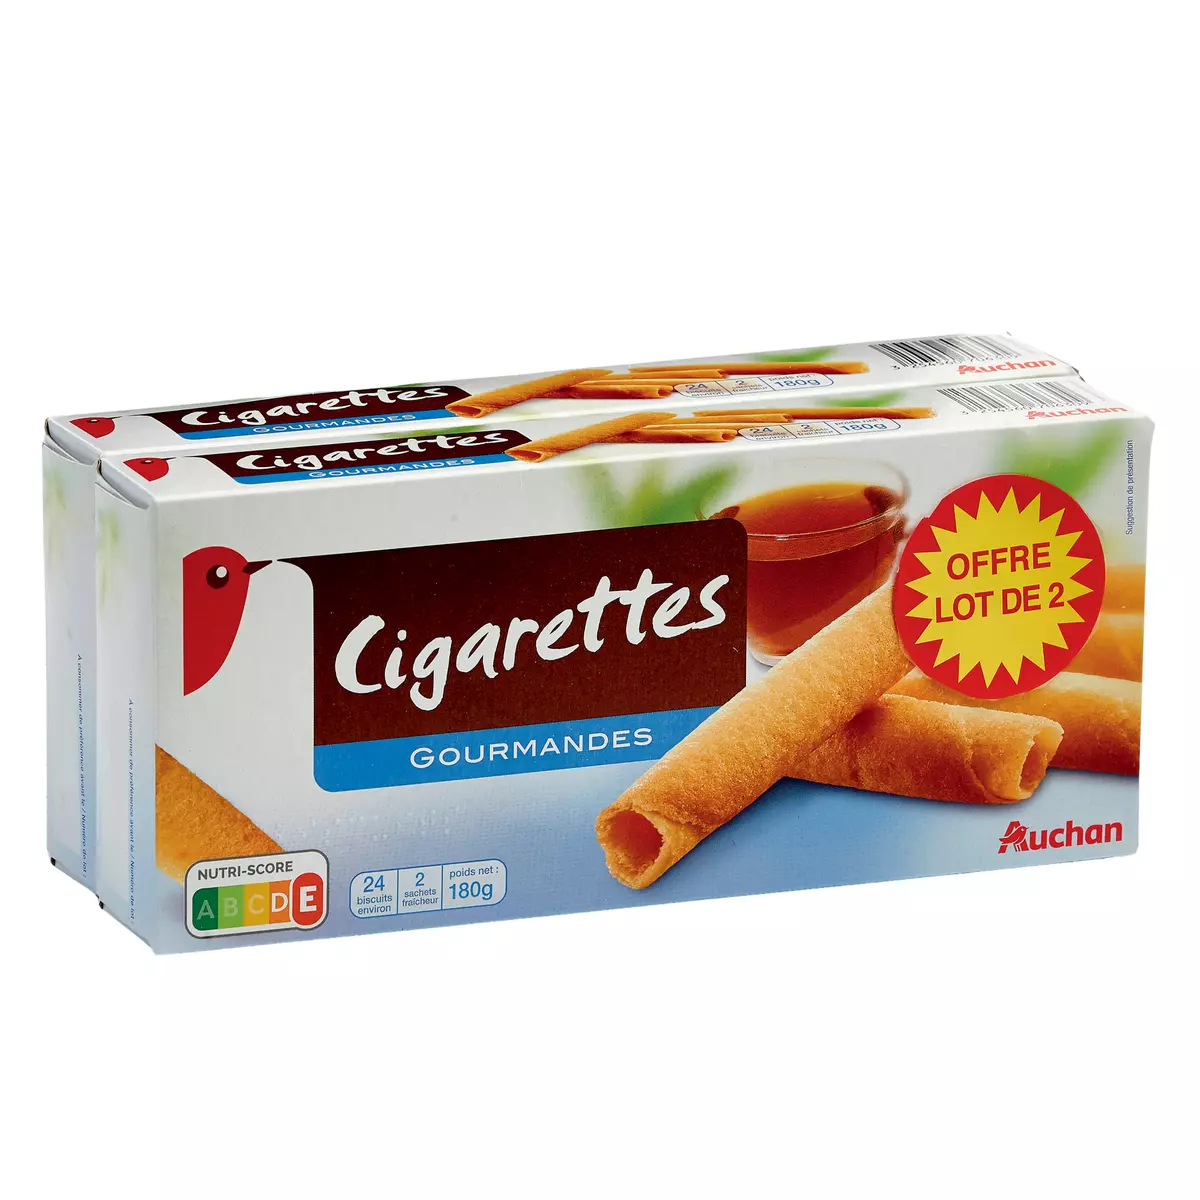 AUCHAN Cigarettes gourmandes 2 paquets 180g